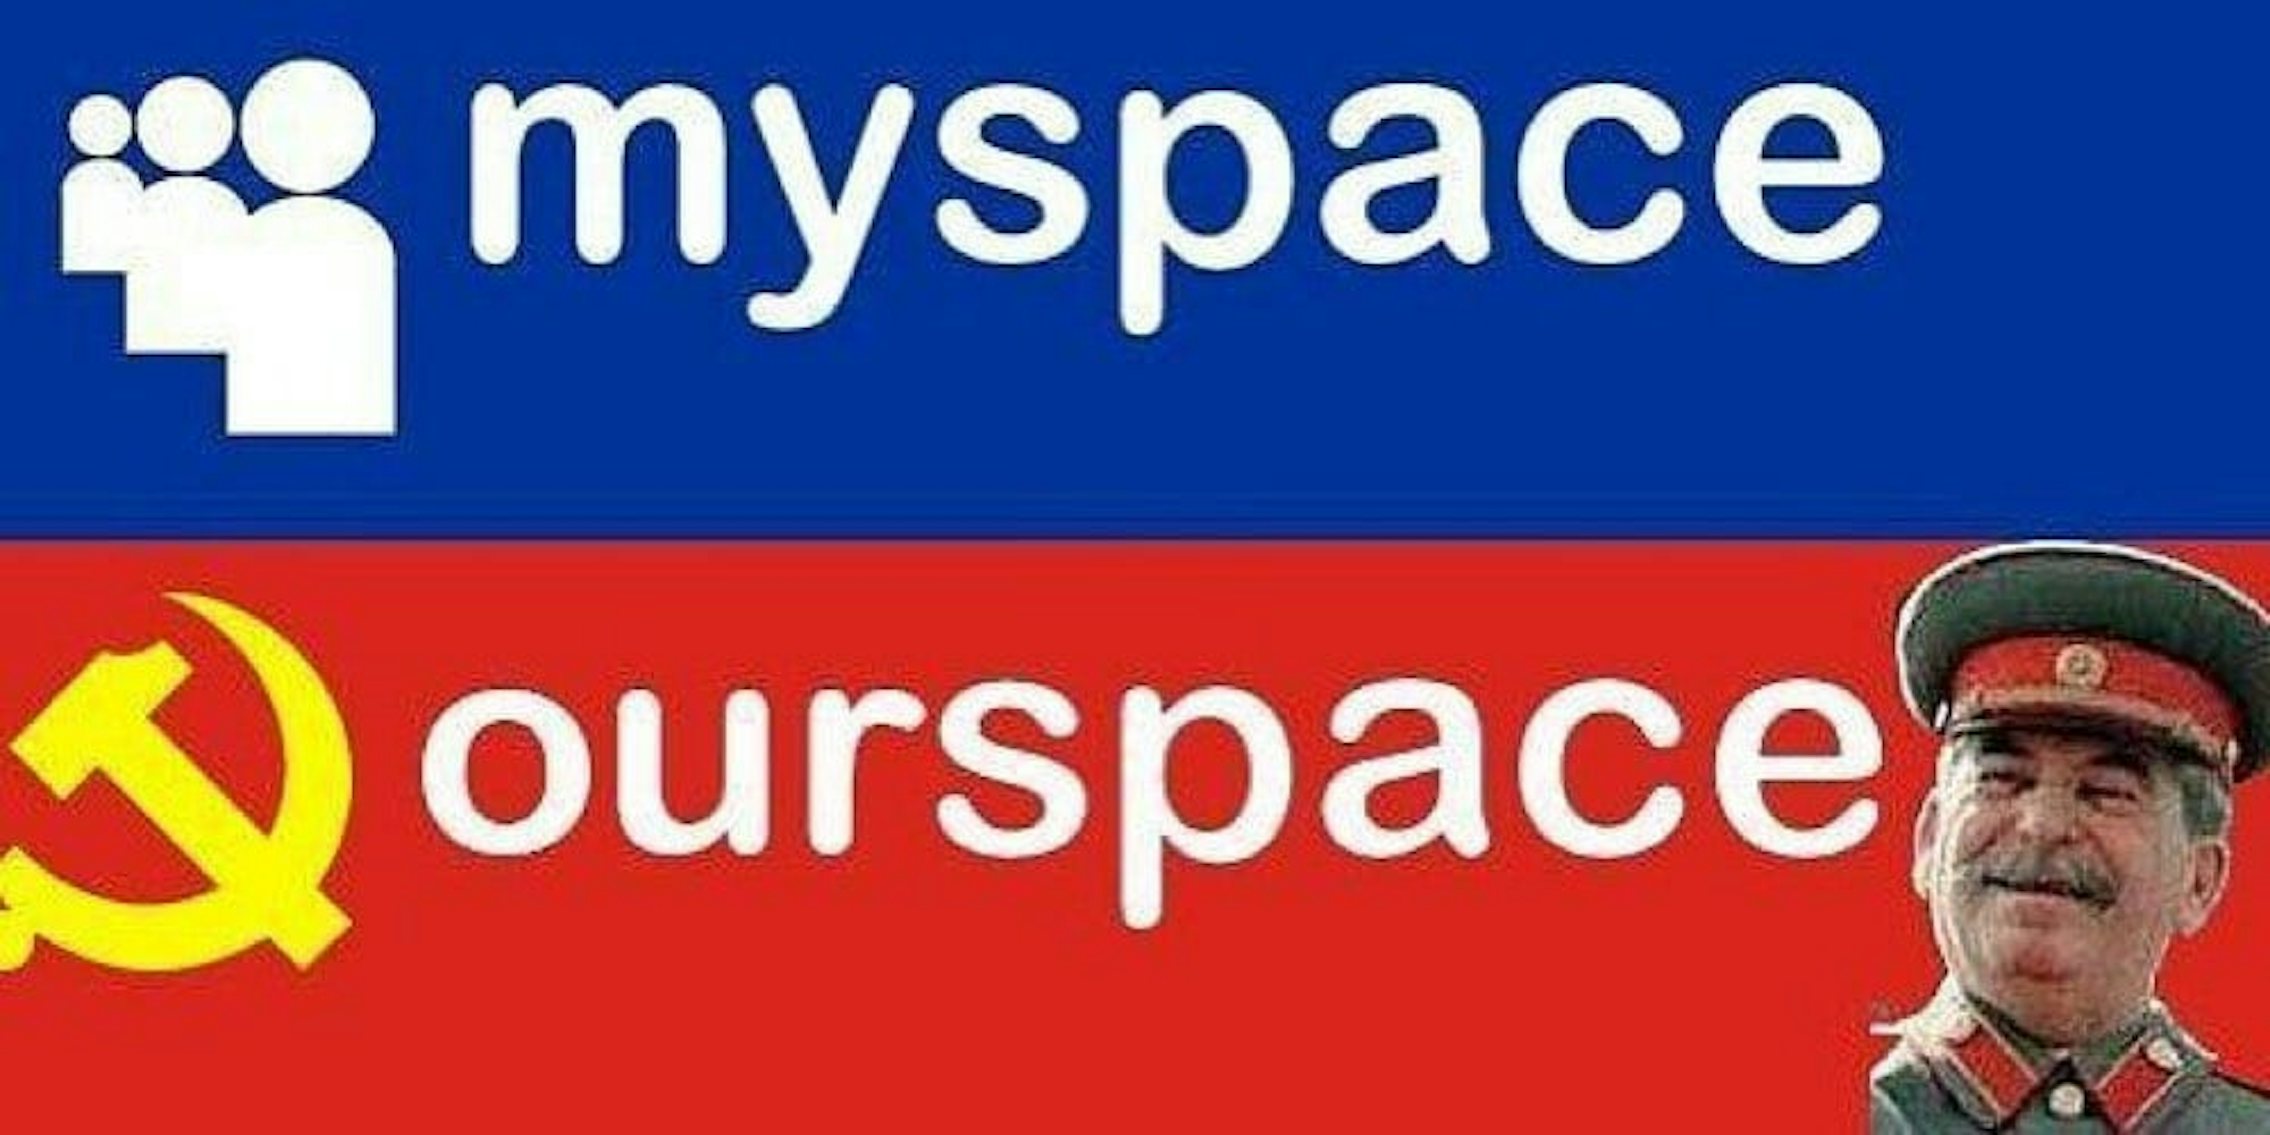 myspace ourspace stalin meme